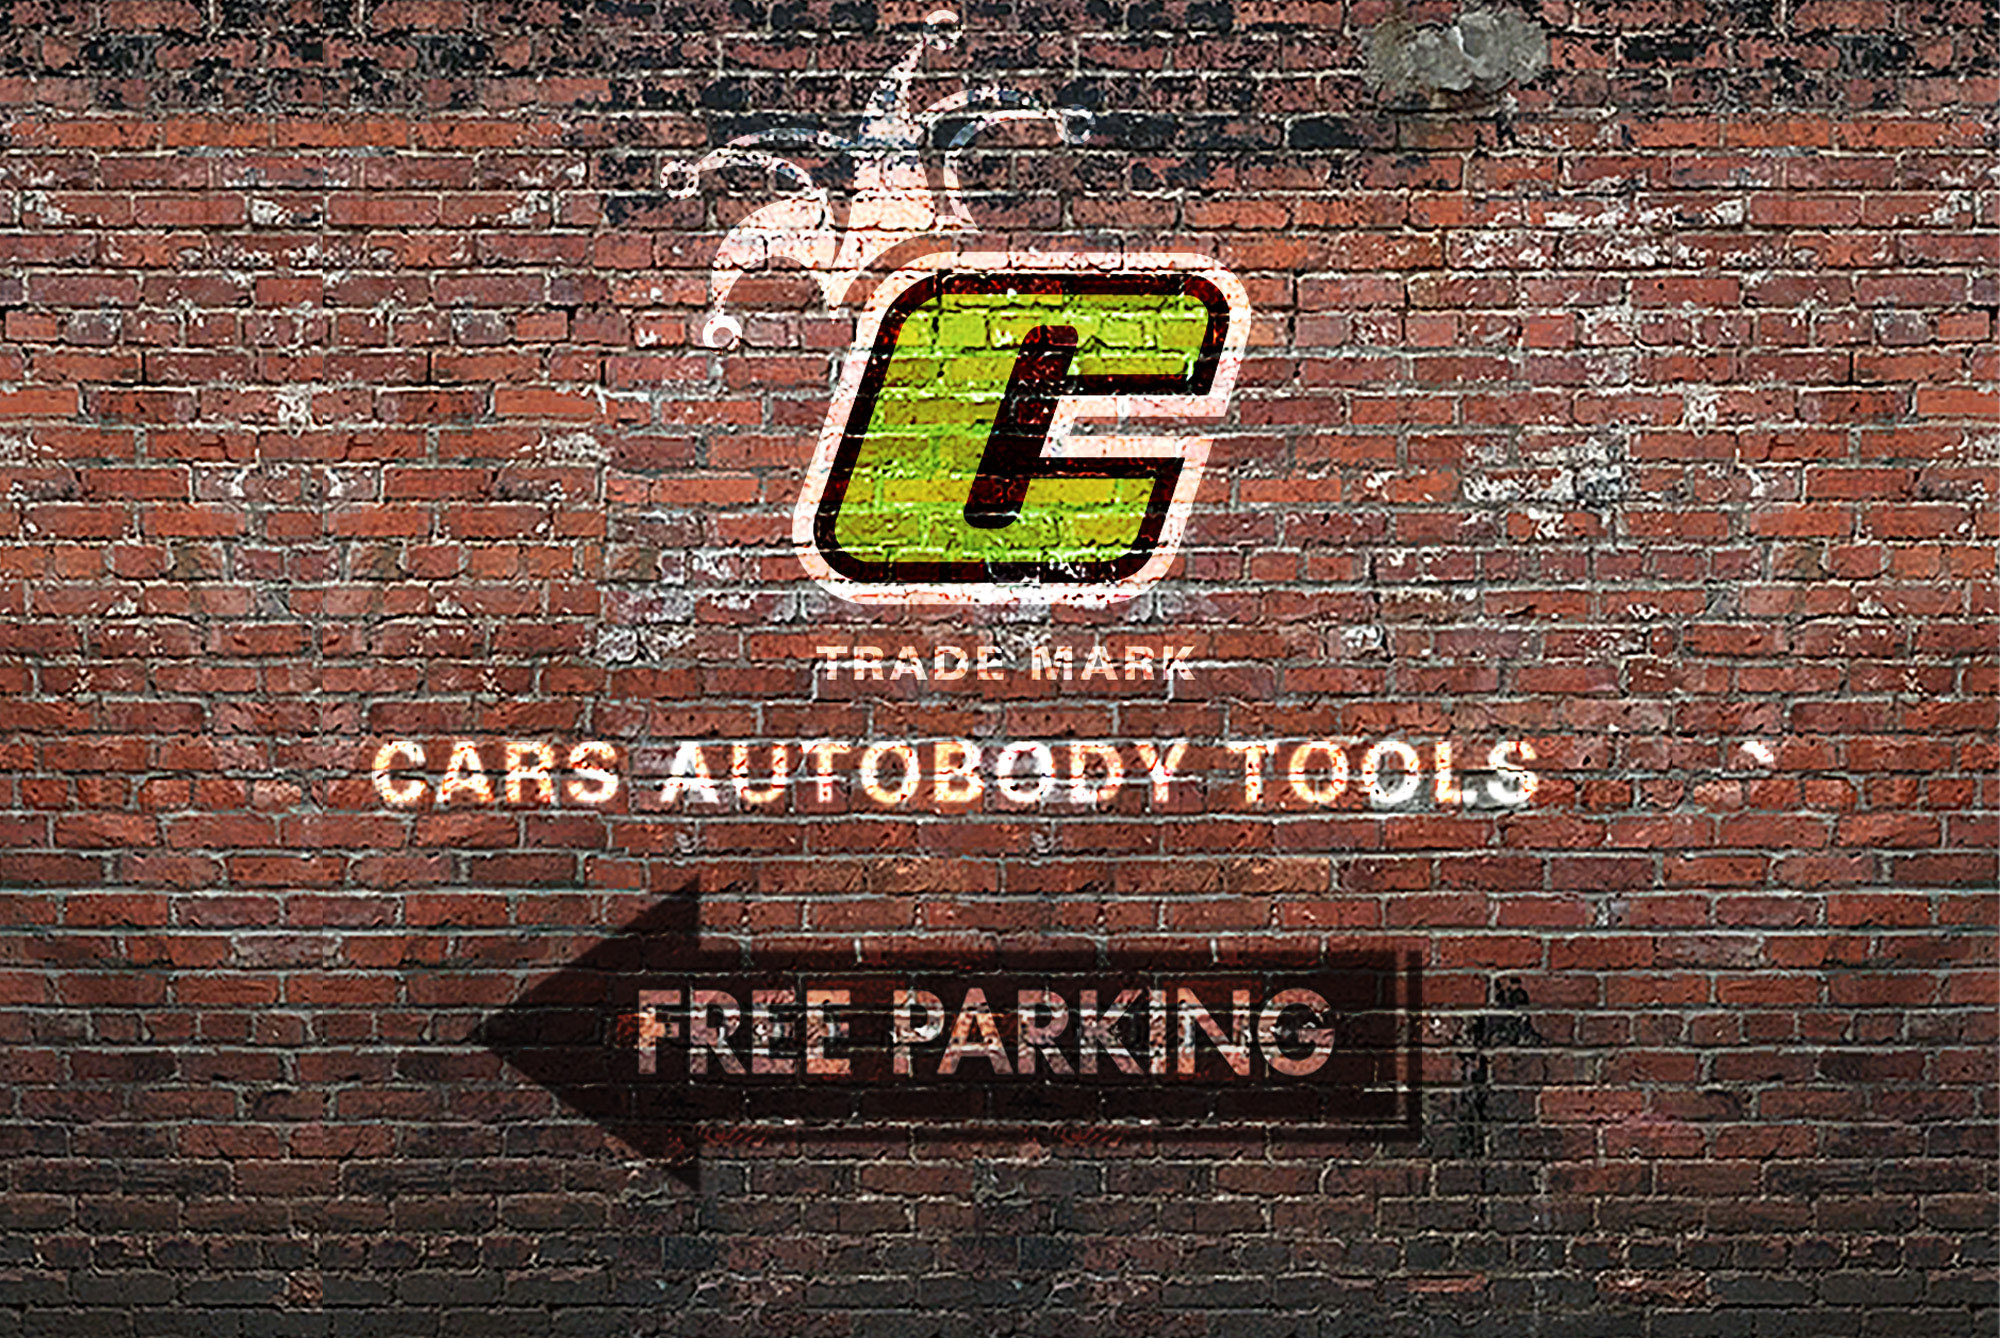 Cars Autobody brand logo on exterior brick wall.